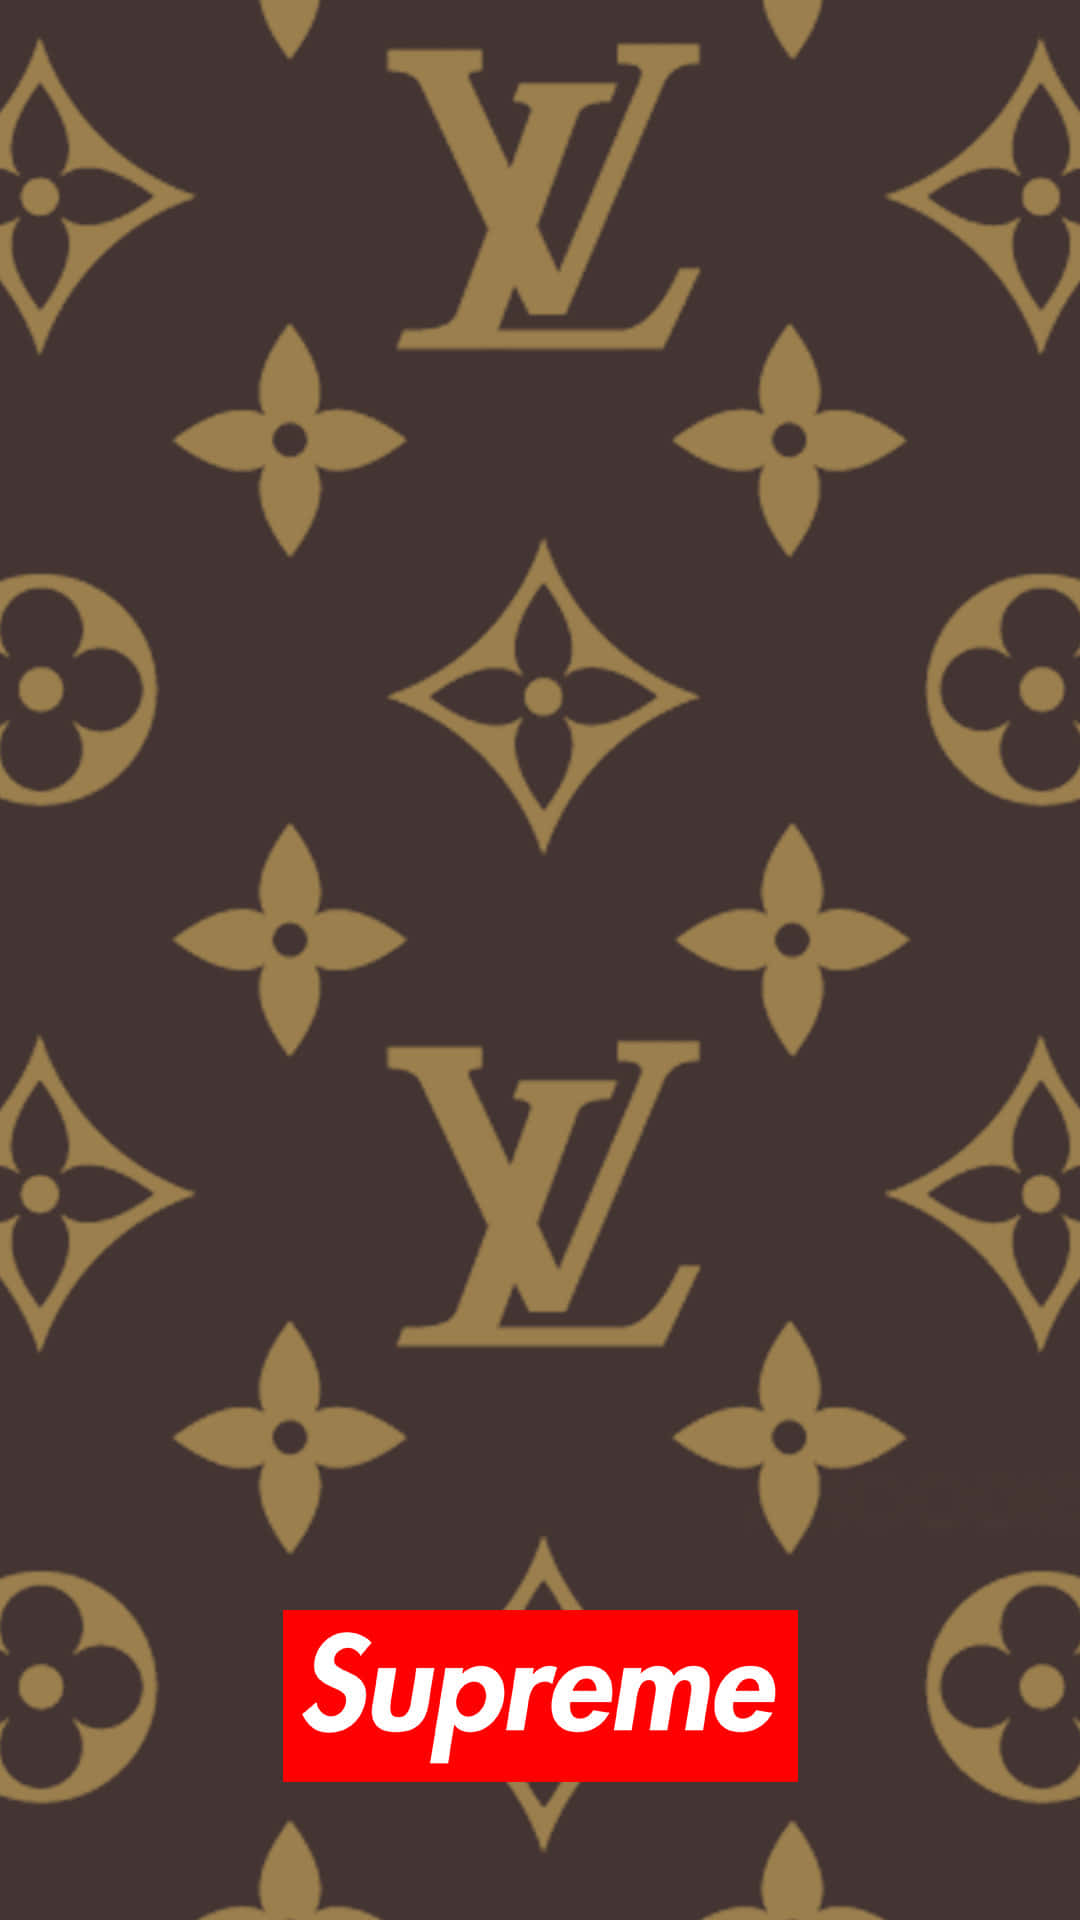 Luis Vuitton x Gucci wallpaper  Supreme wallpaper, Iphone wallpaper  fashion, Phone wallpapers vintage